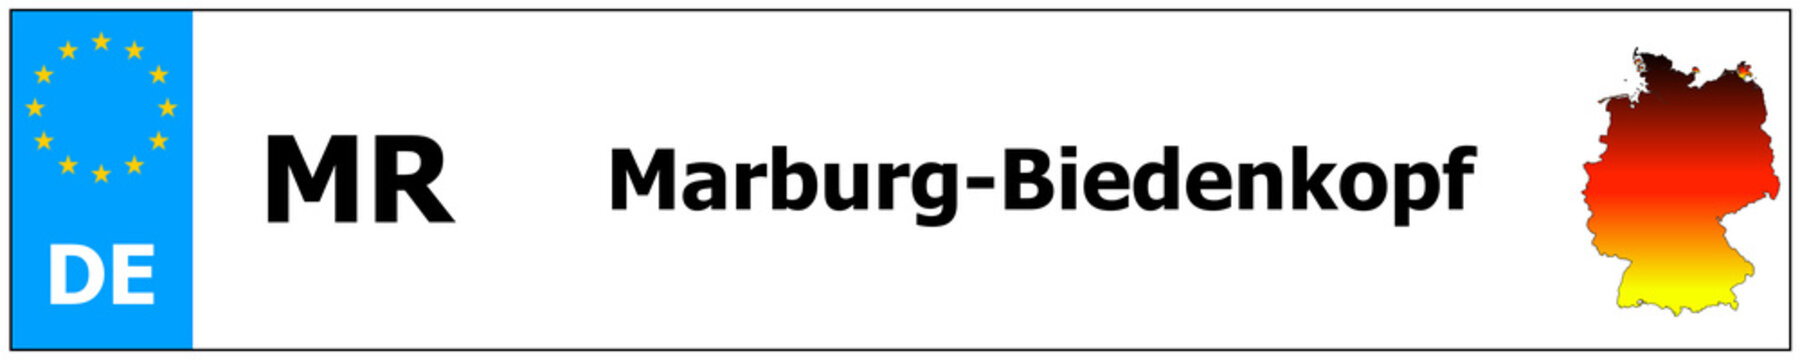 Marburg-Biedenkopf car licence plate sticker name and map of Germany. Vehicle registration plates frames German number